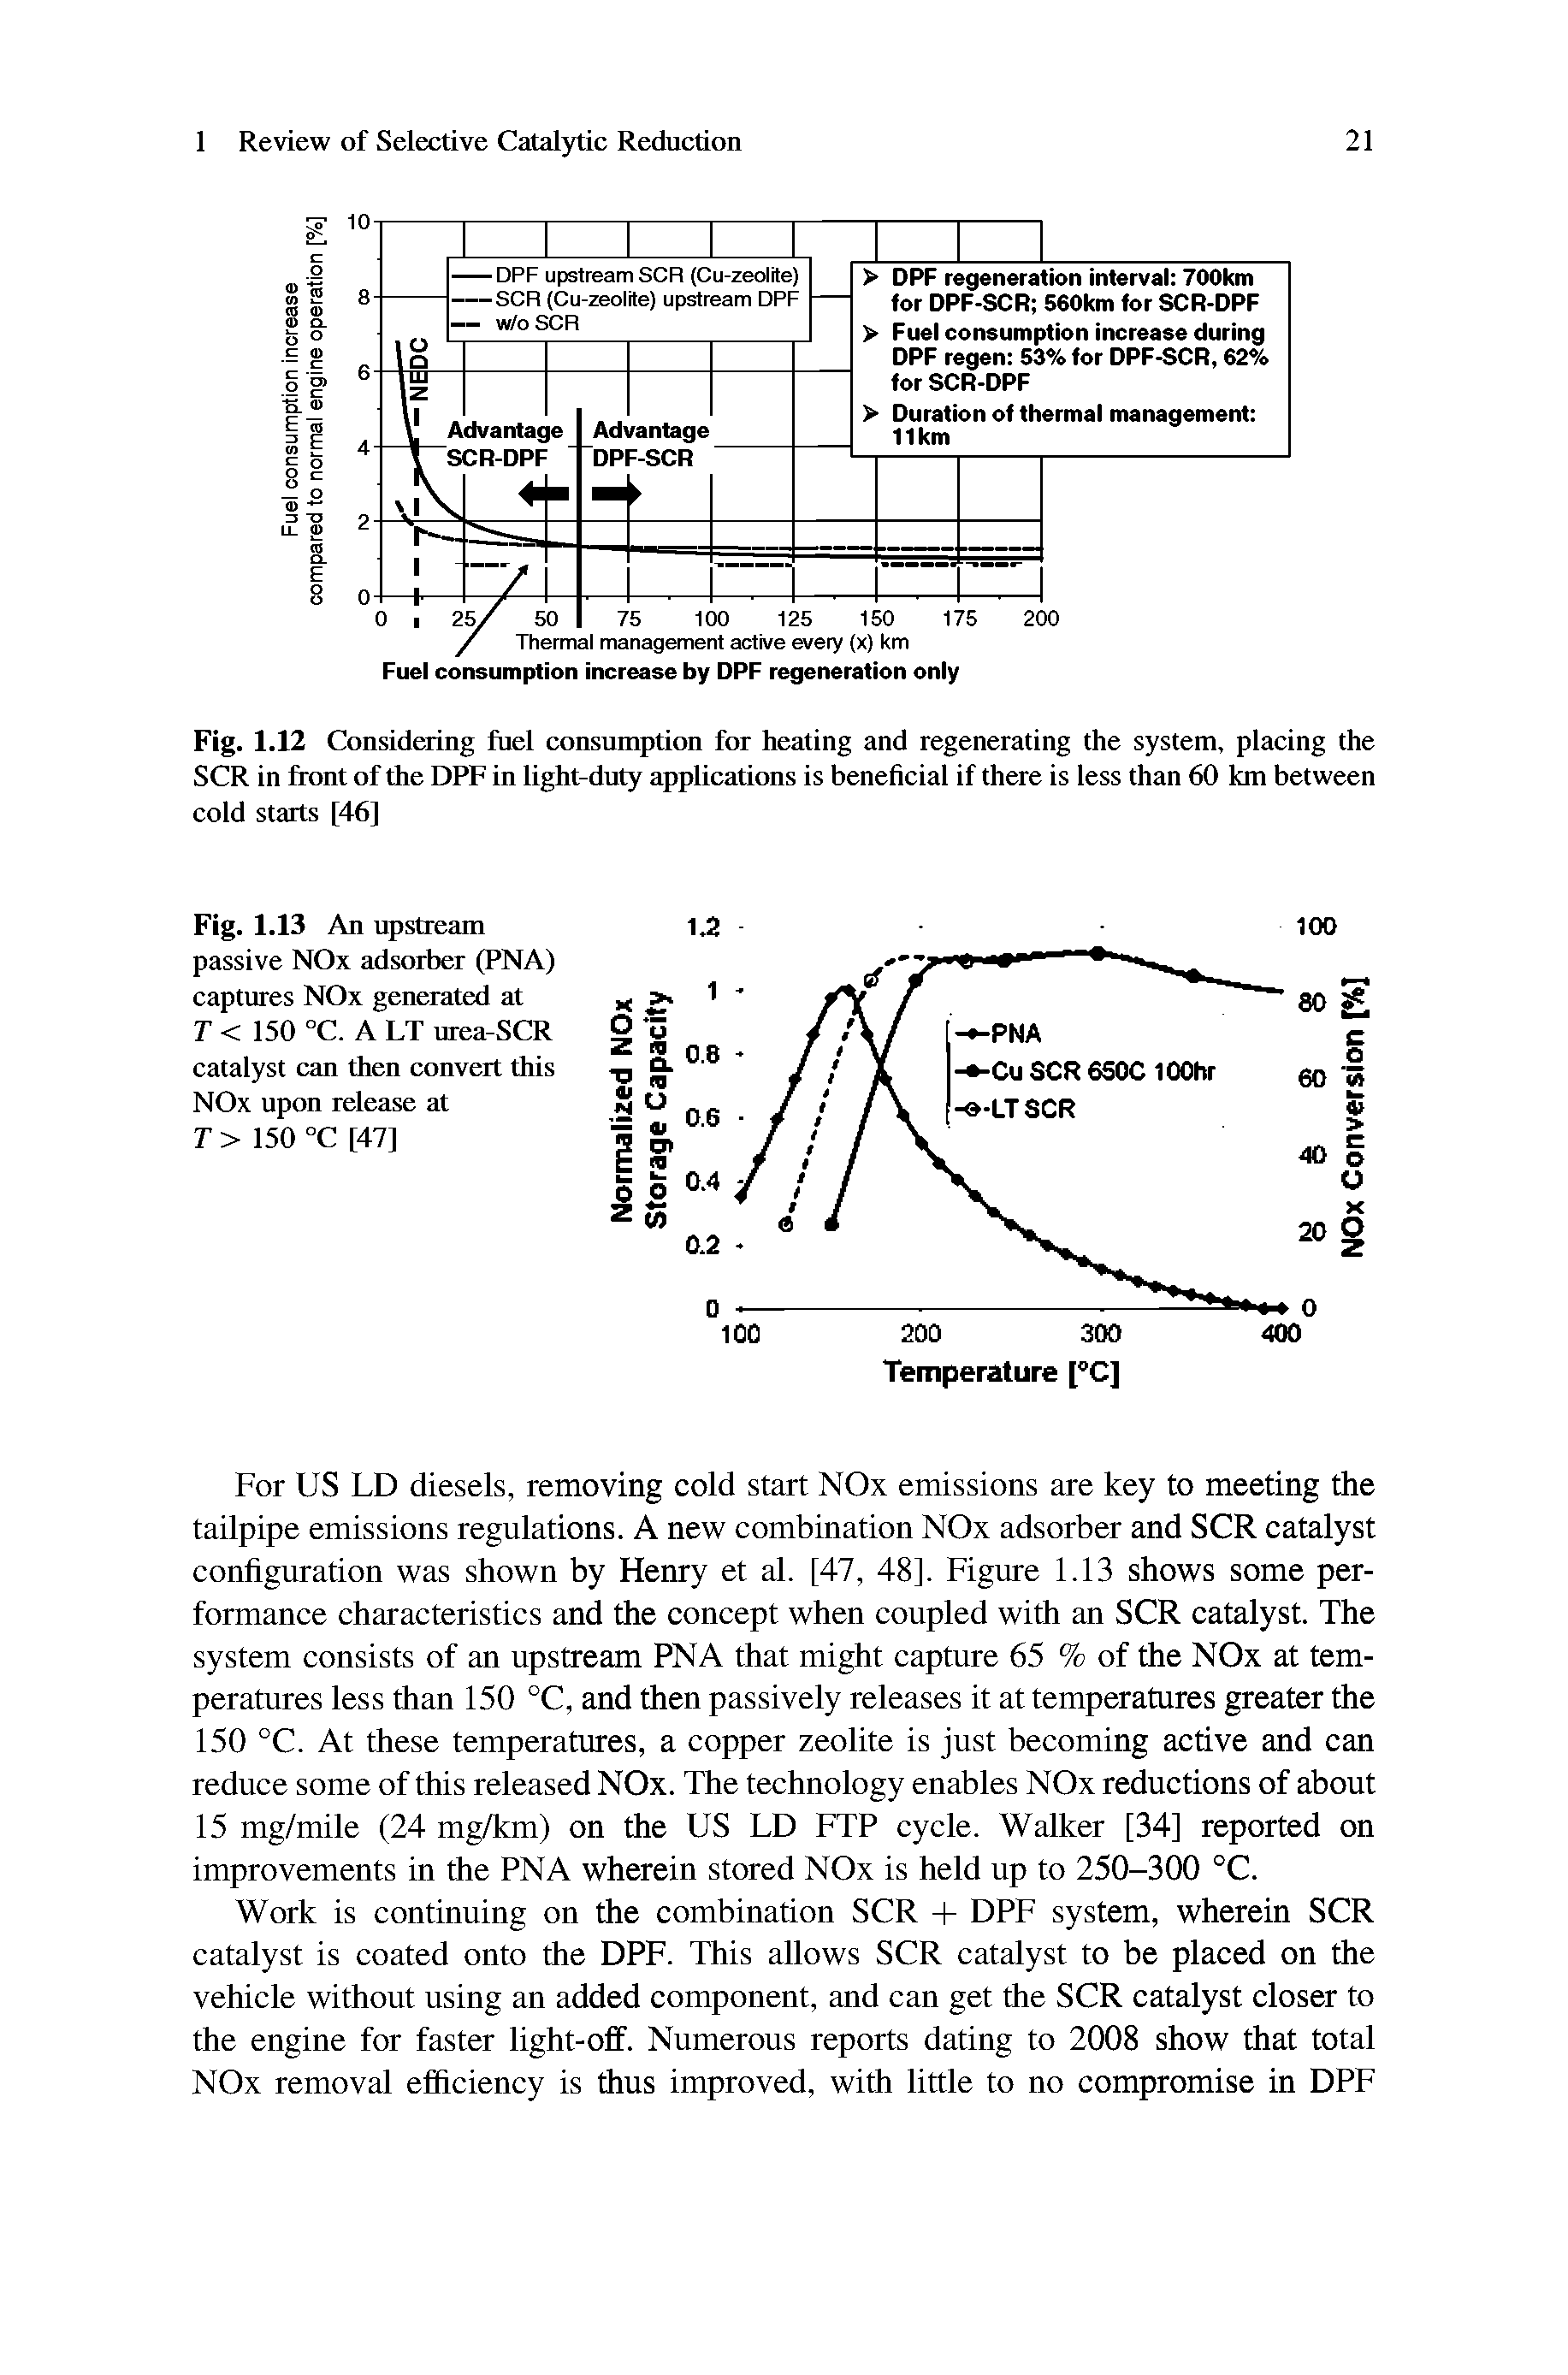 Fig. 1.13 An upstream passive NOx adsorber (PNA) captures NOx generated at T < 150 °C. A LT urea-SCR catalyst can then convert this NOx upon release at T > 150 °C [47]...